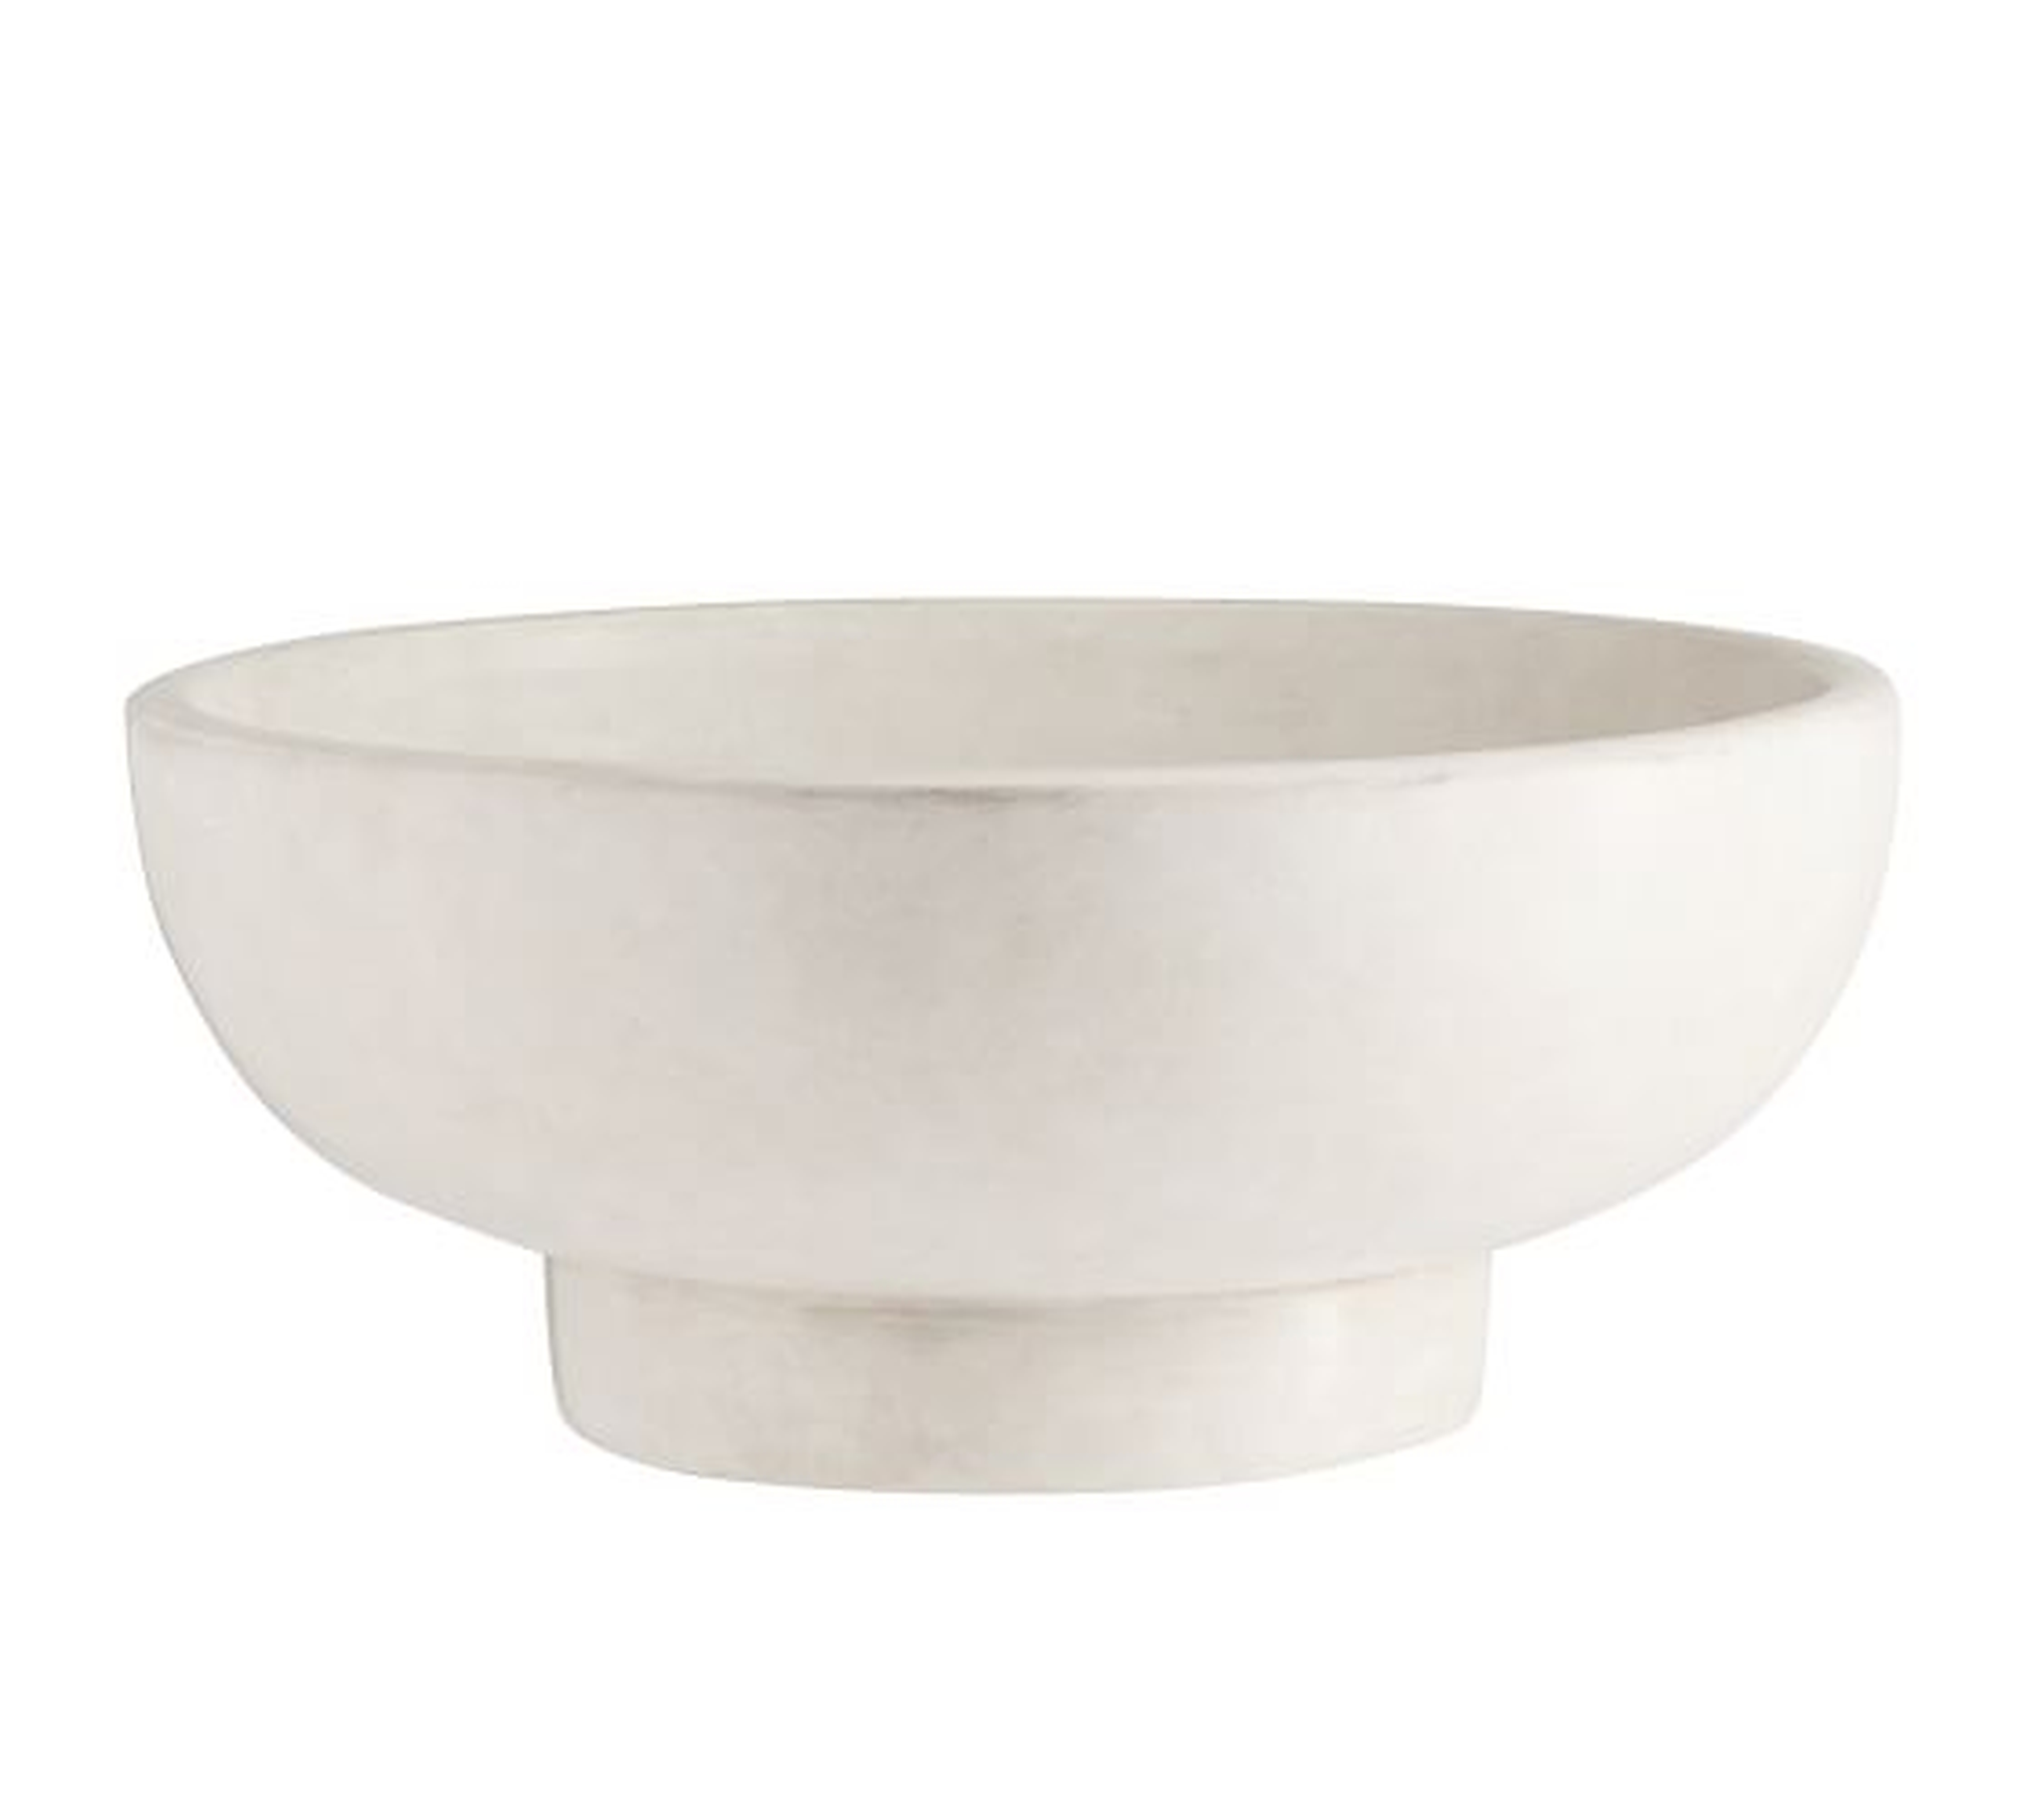 Ceramic bowl - Pottery Barn